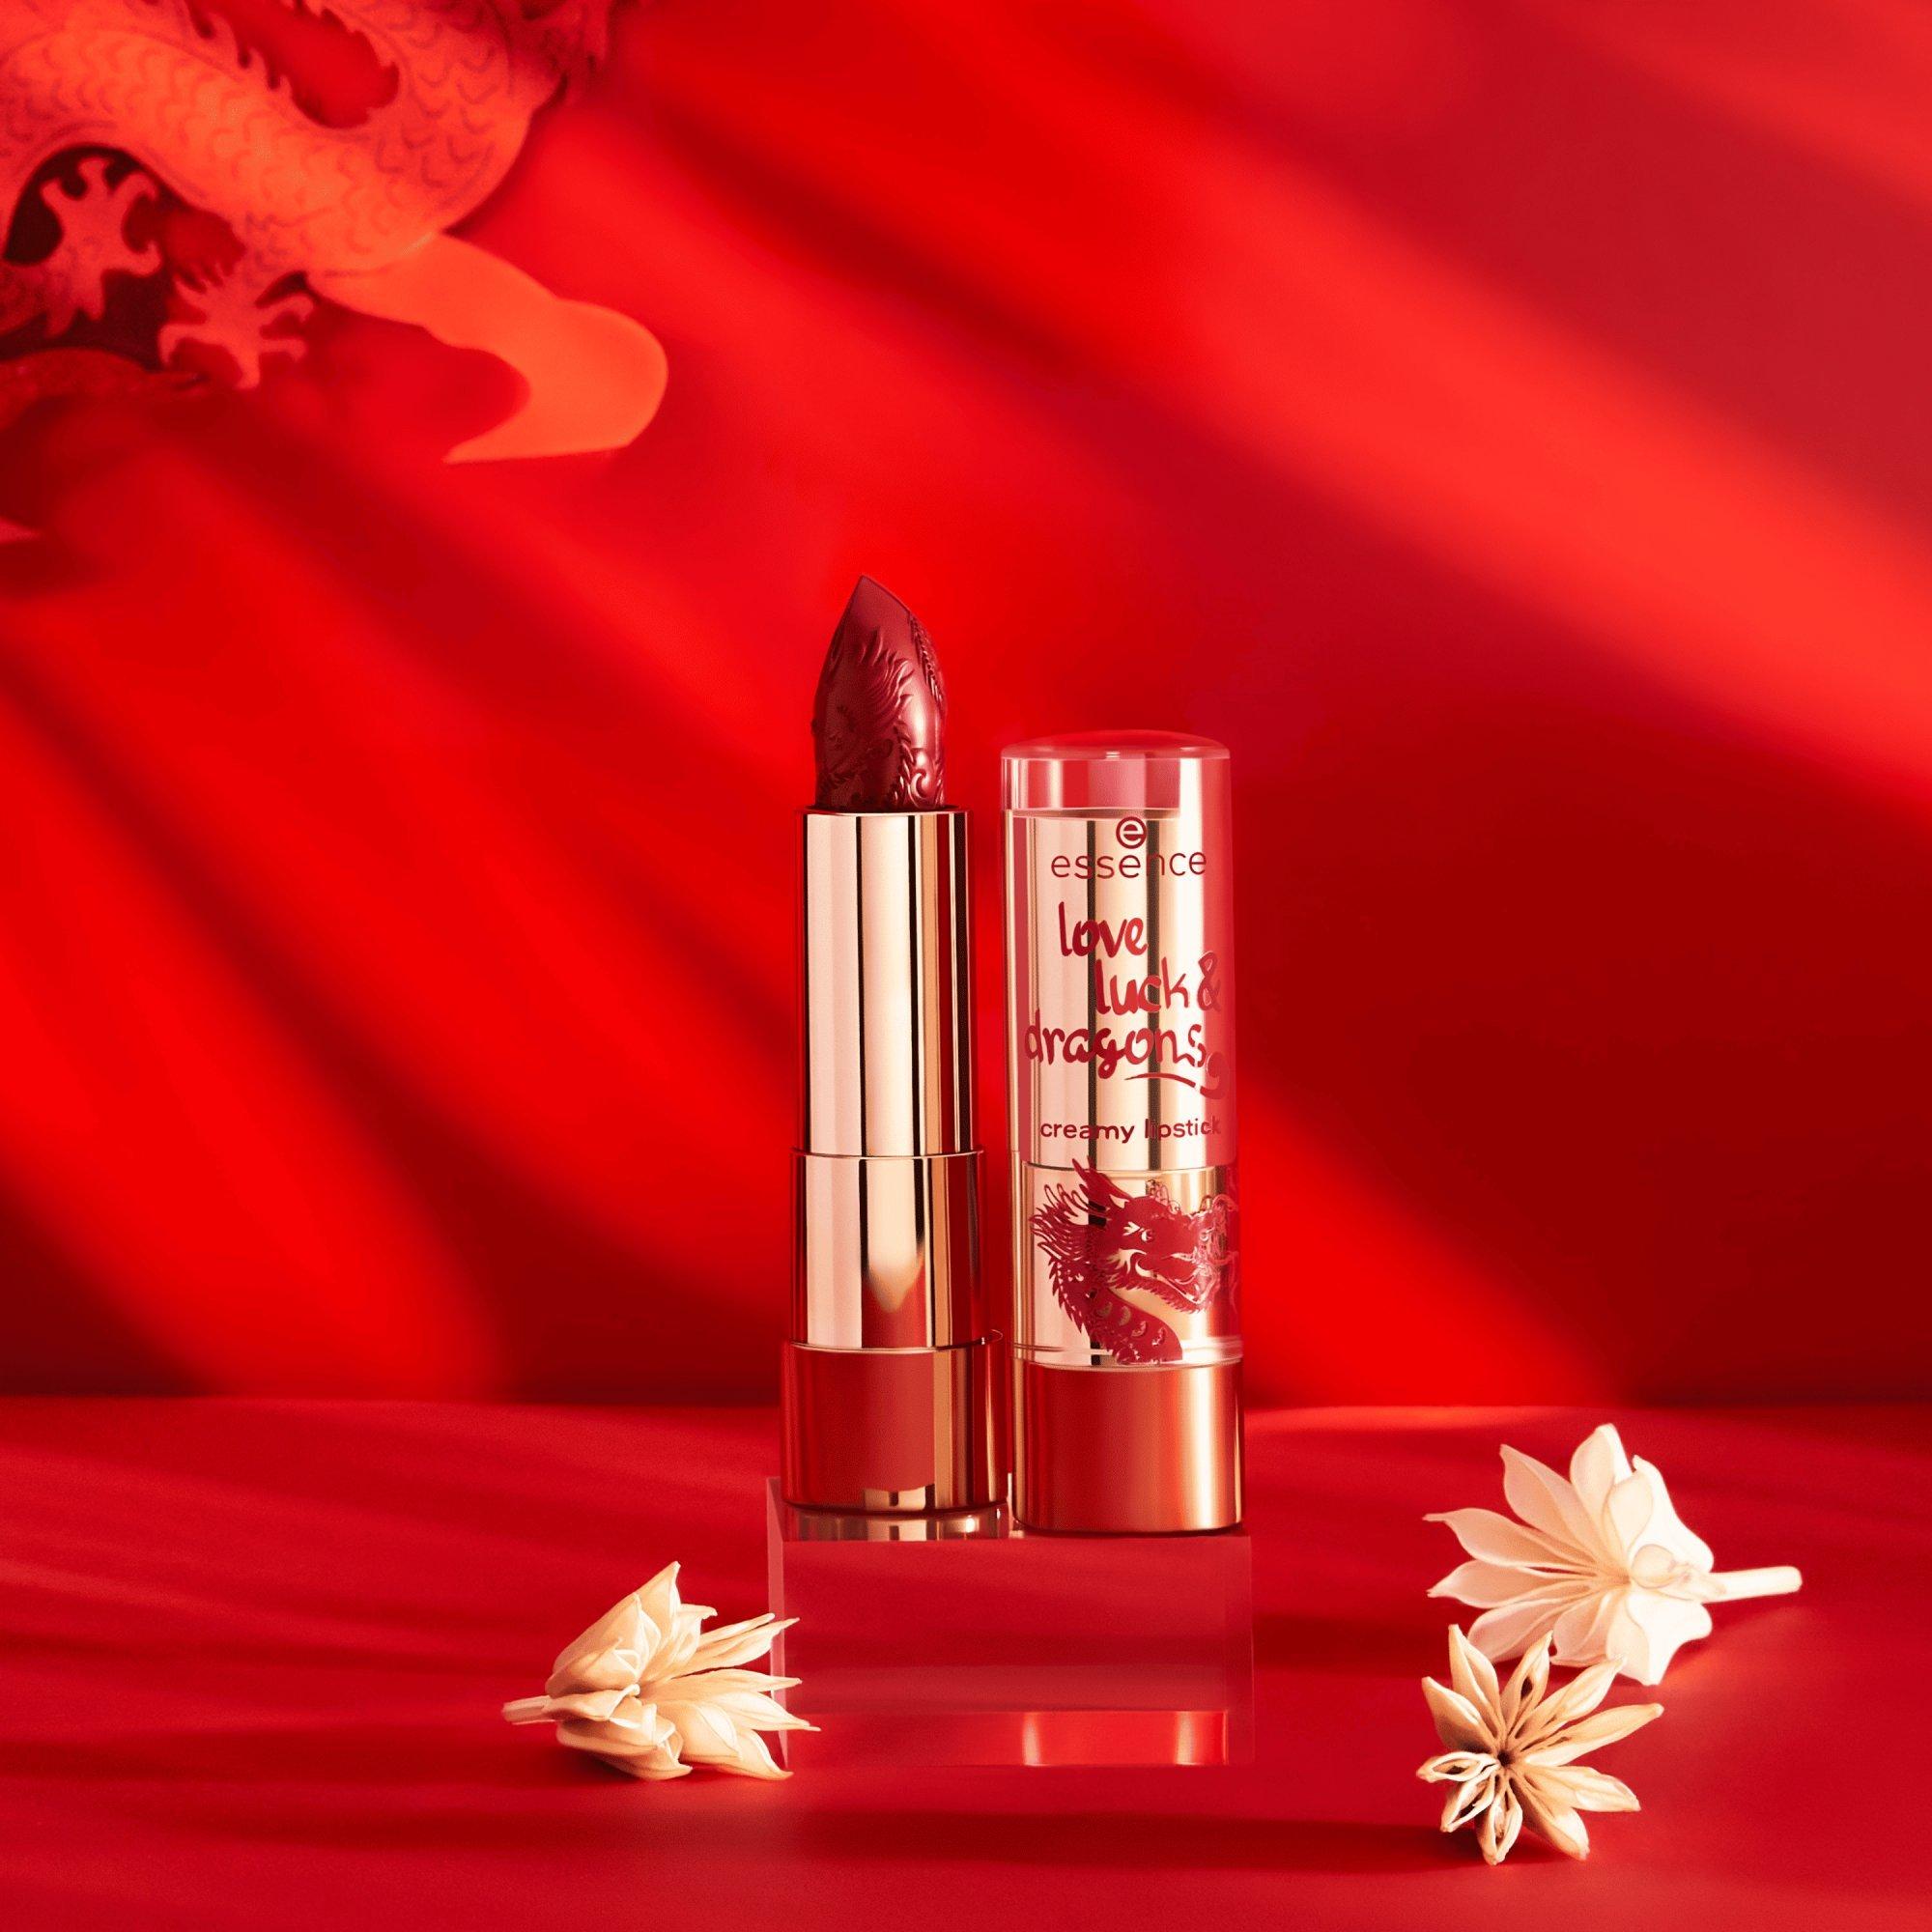 love, luck & dragons creamy lipstick rouge à lèvres